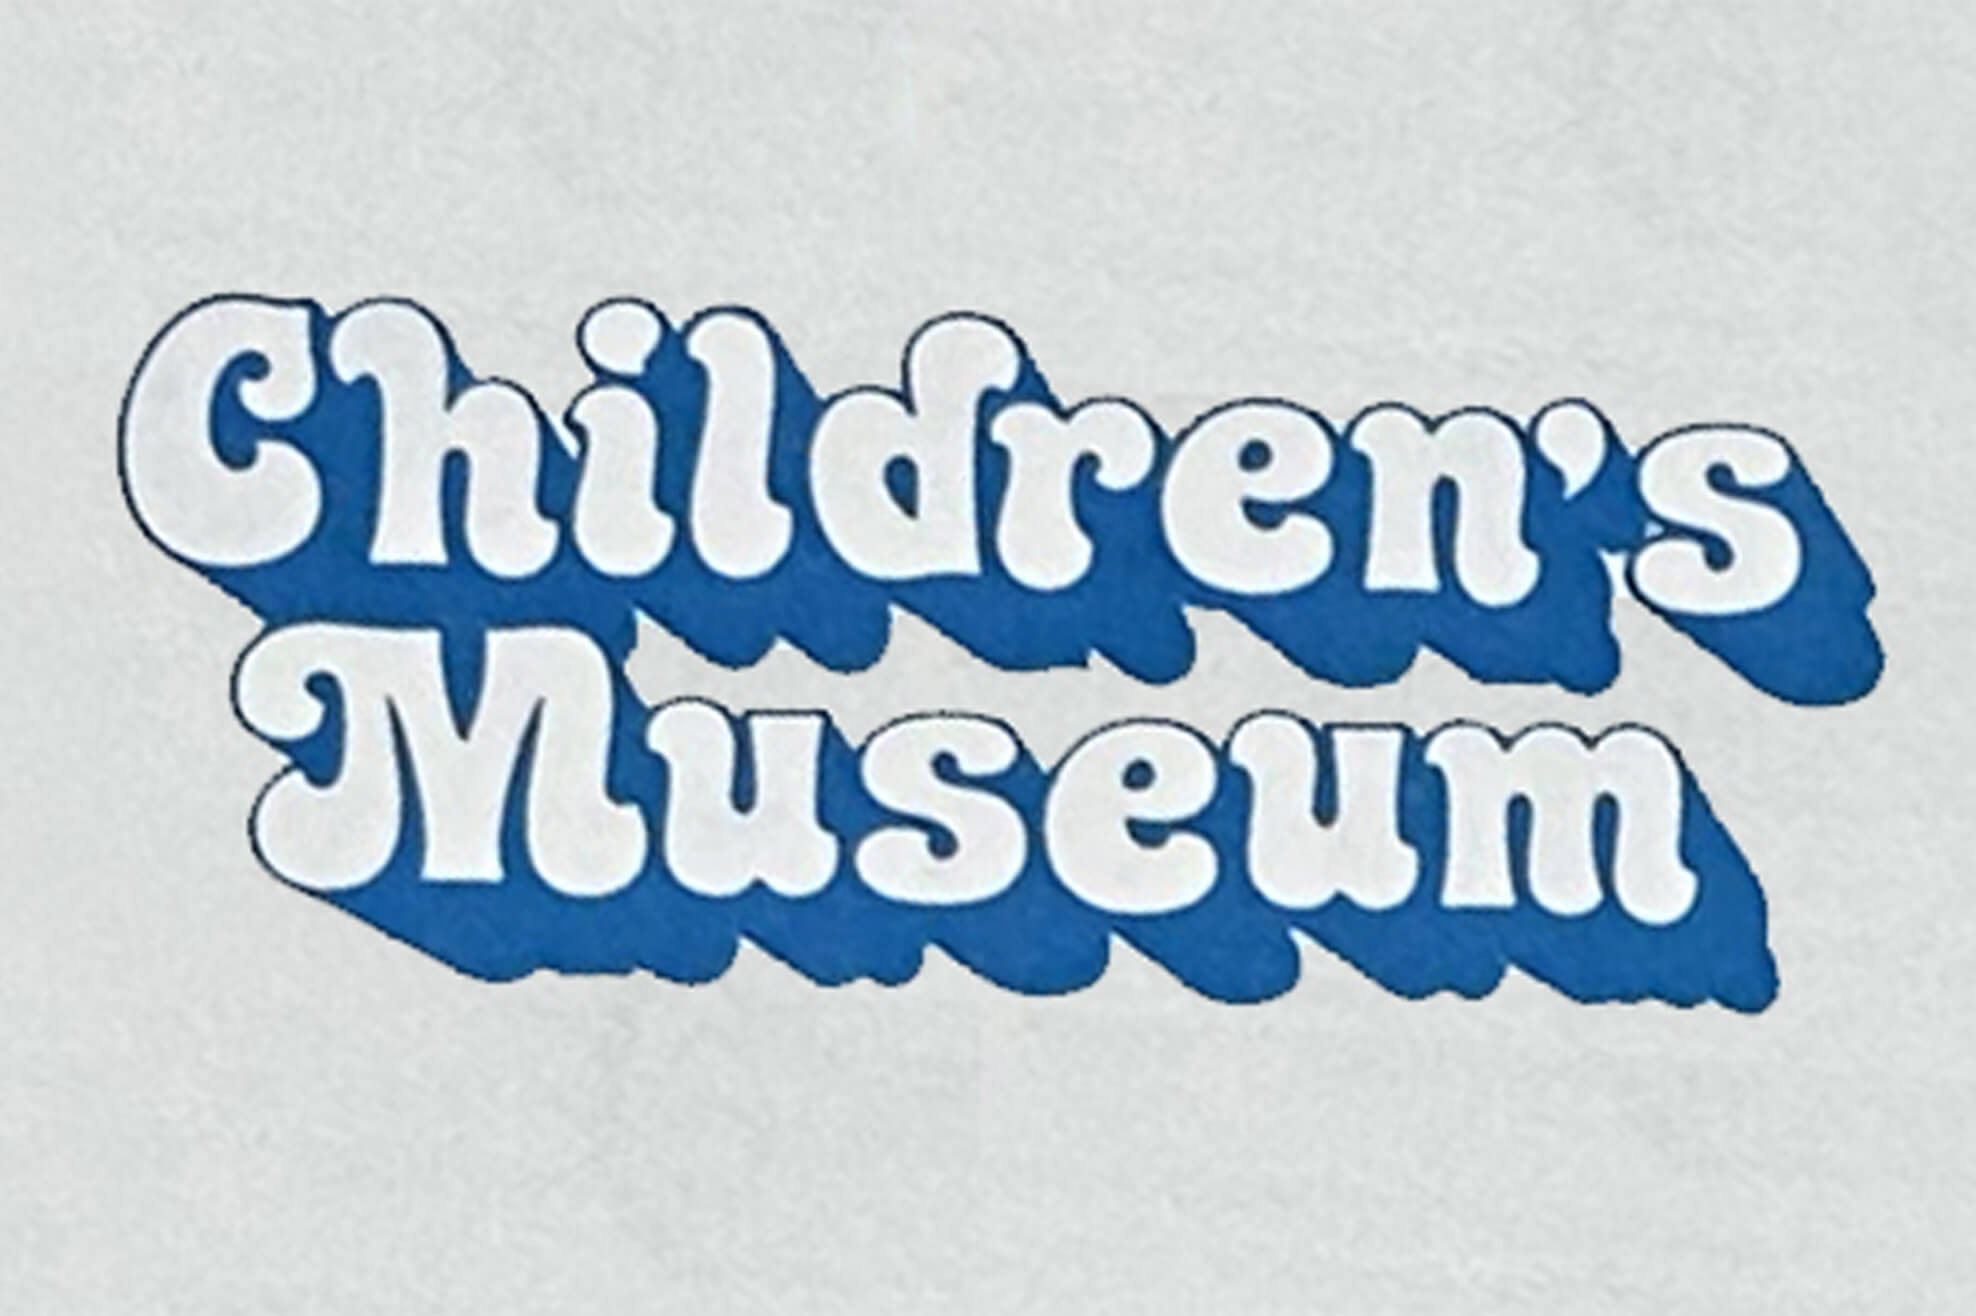 Utica Children's Museum History 1974